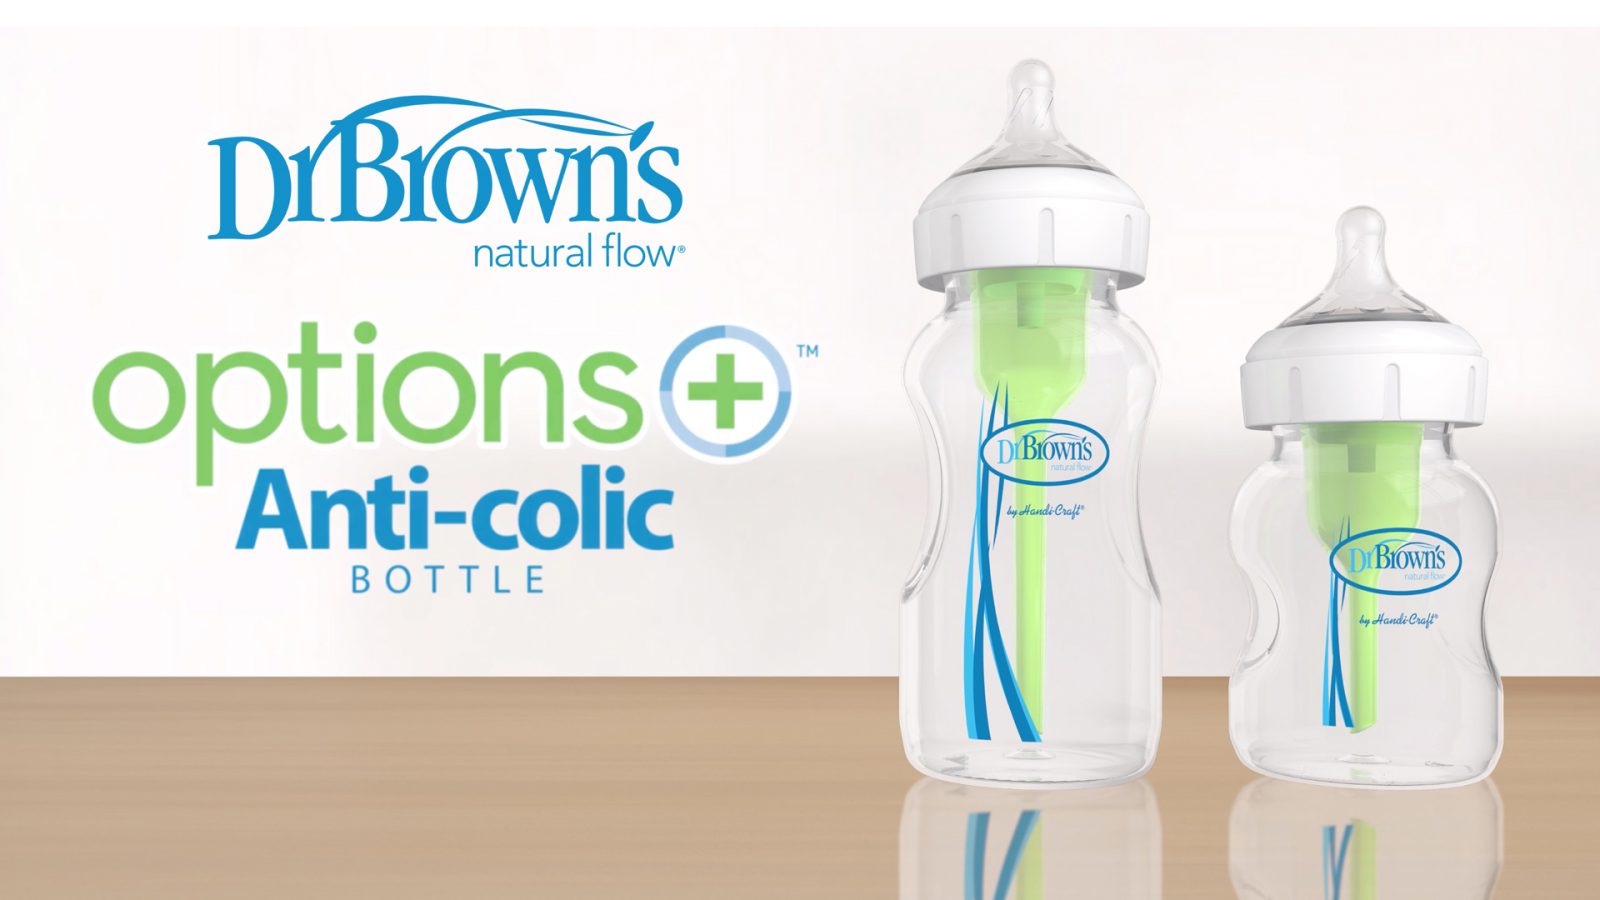 Dr. Brown's Natural Flow® Options+™ Wide-Neck Glass Bottle